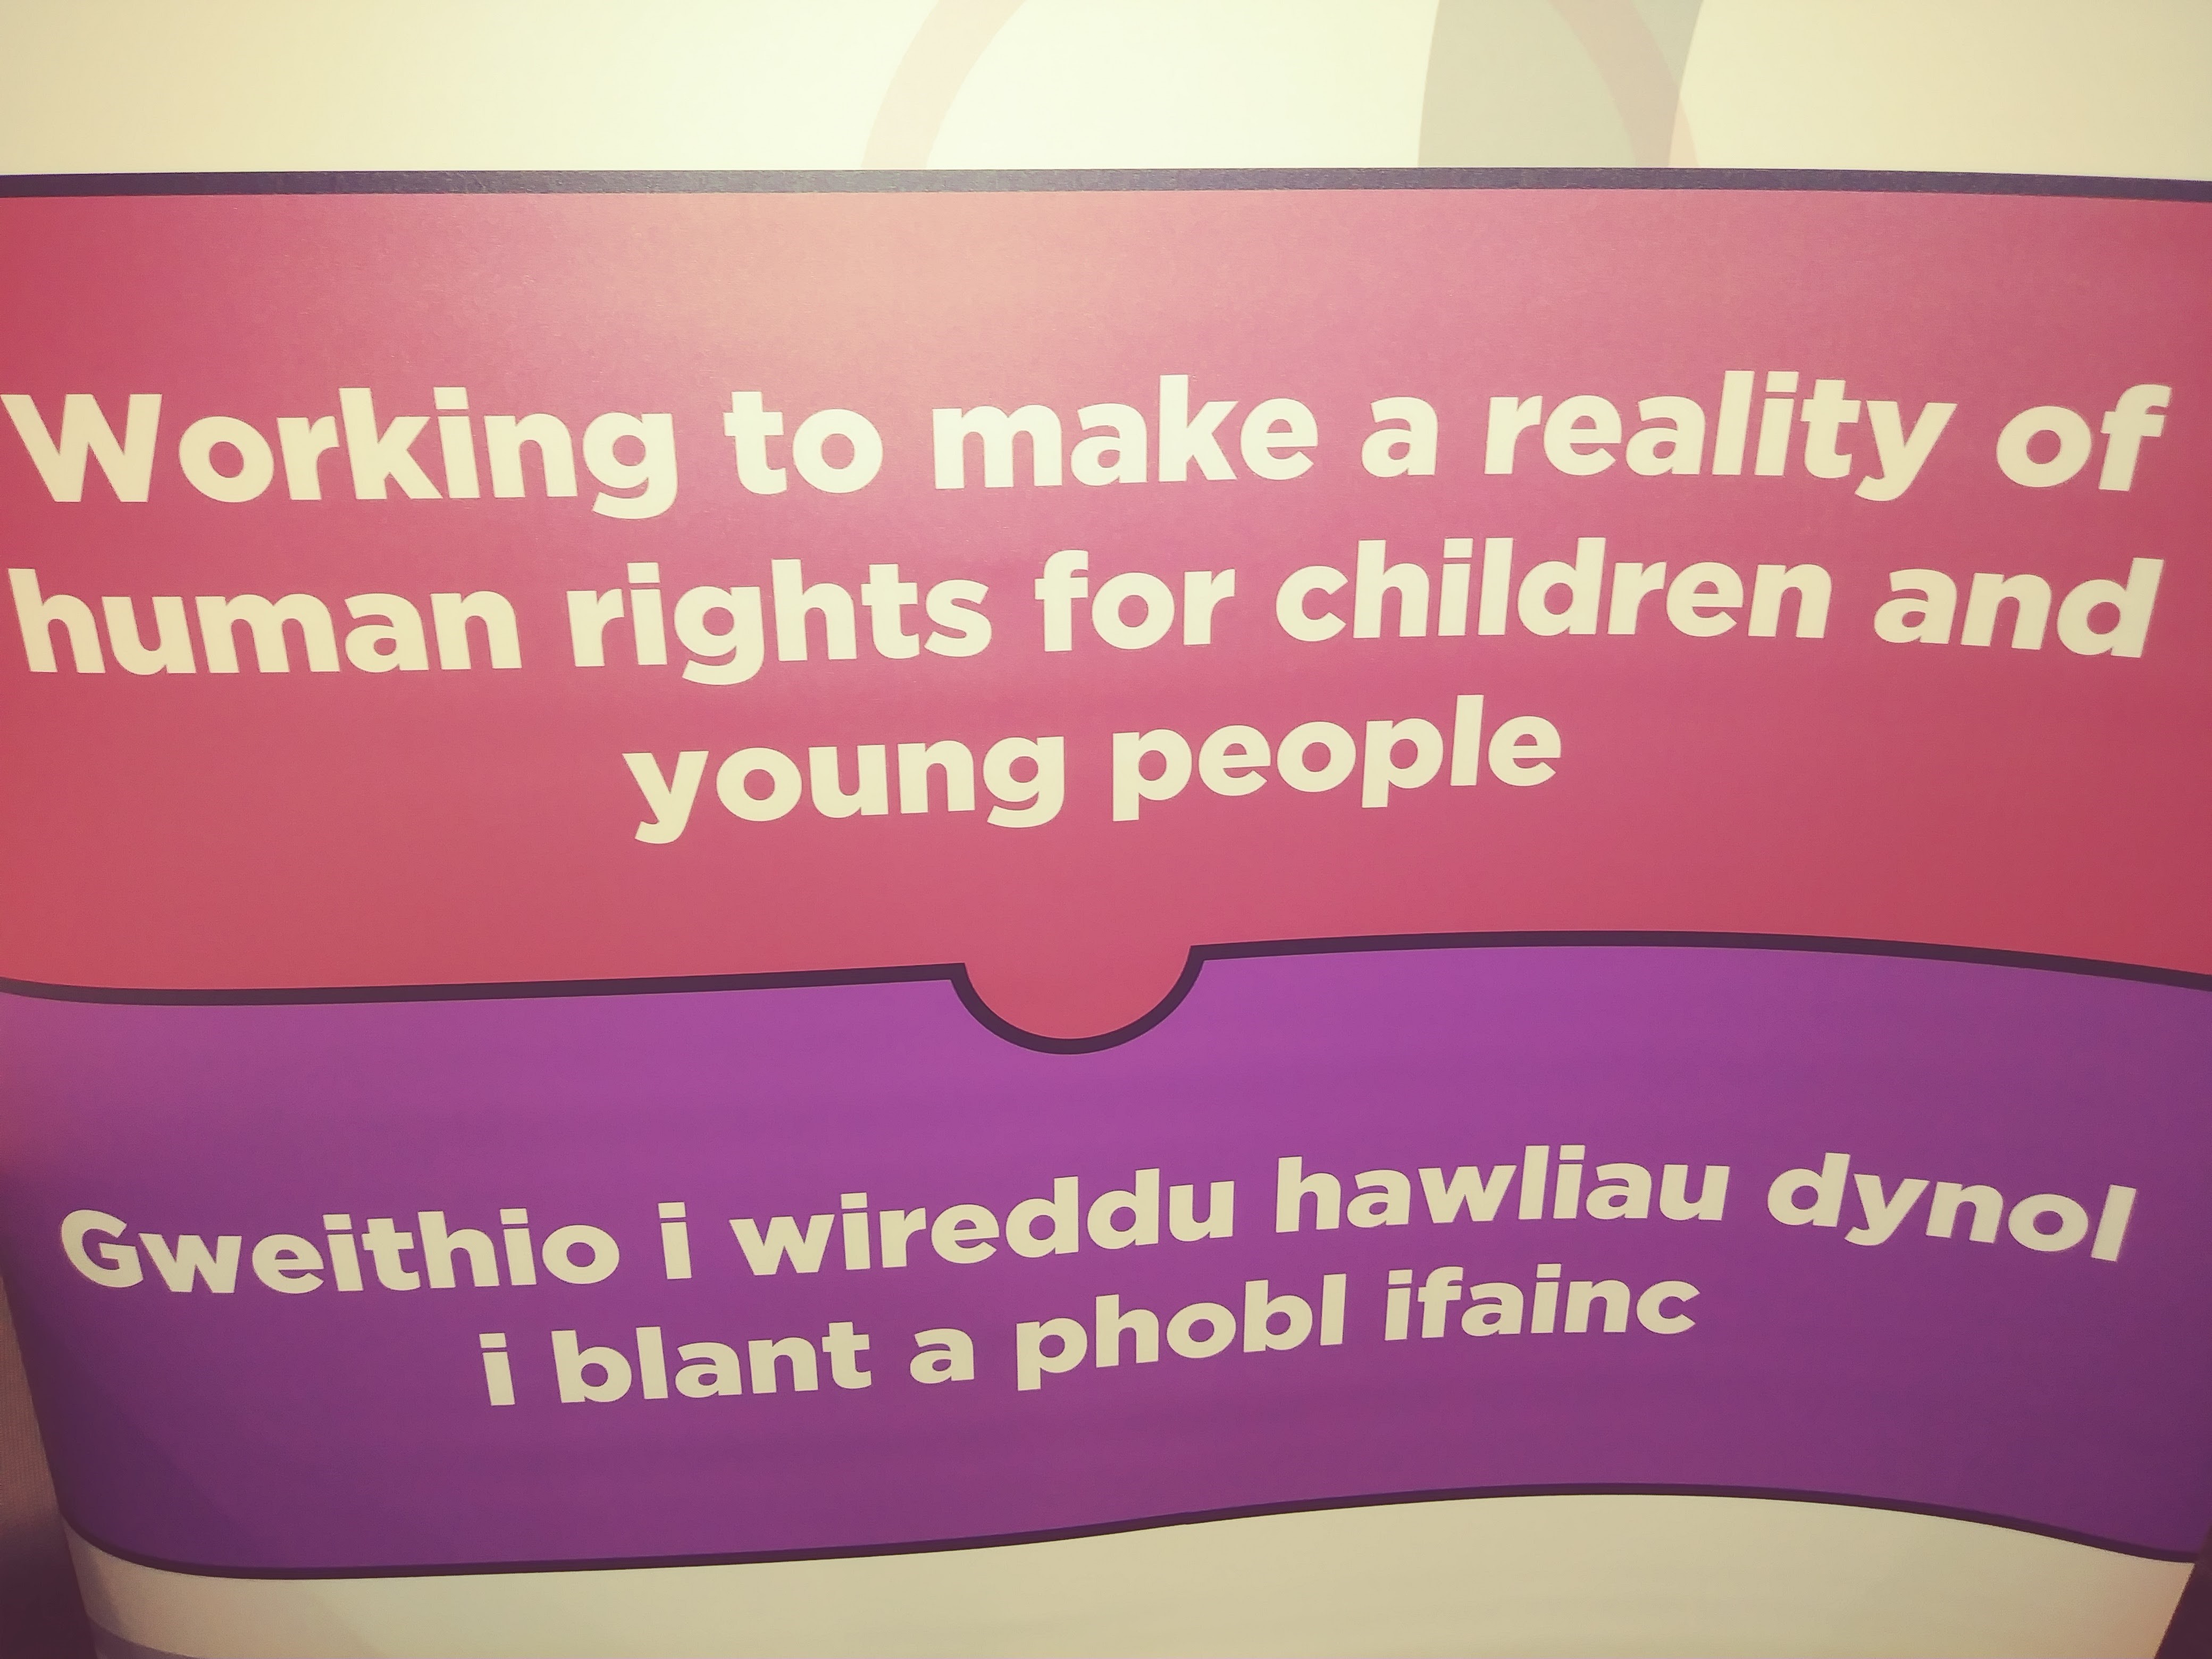 Child Rights